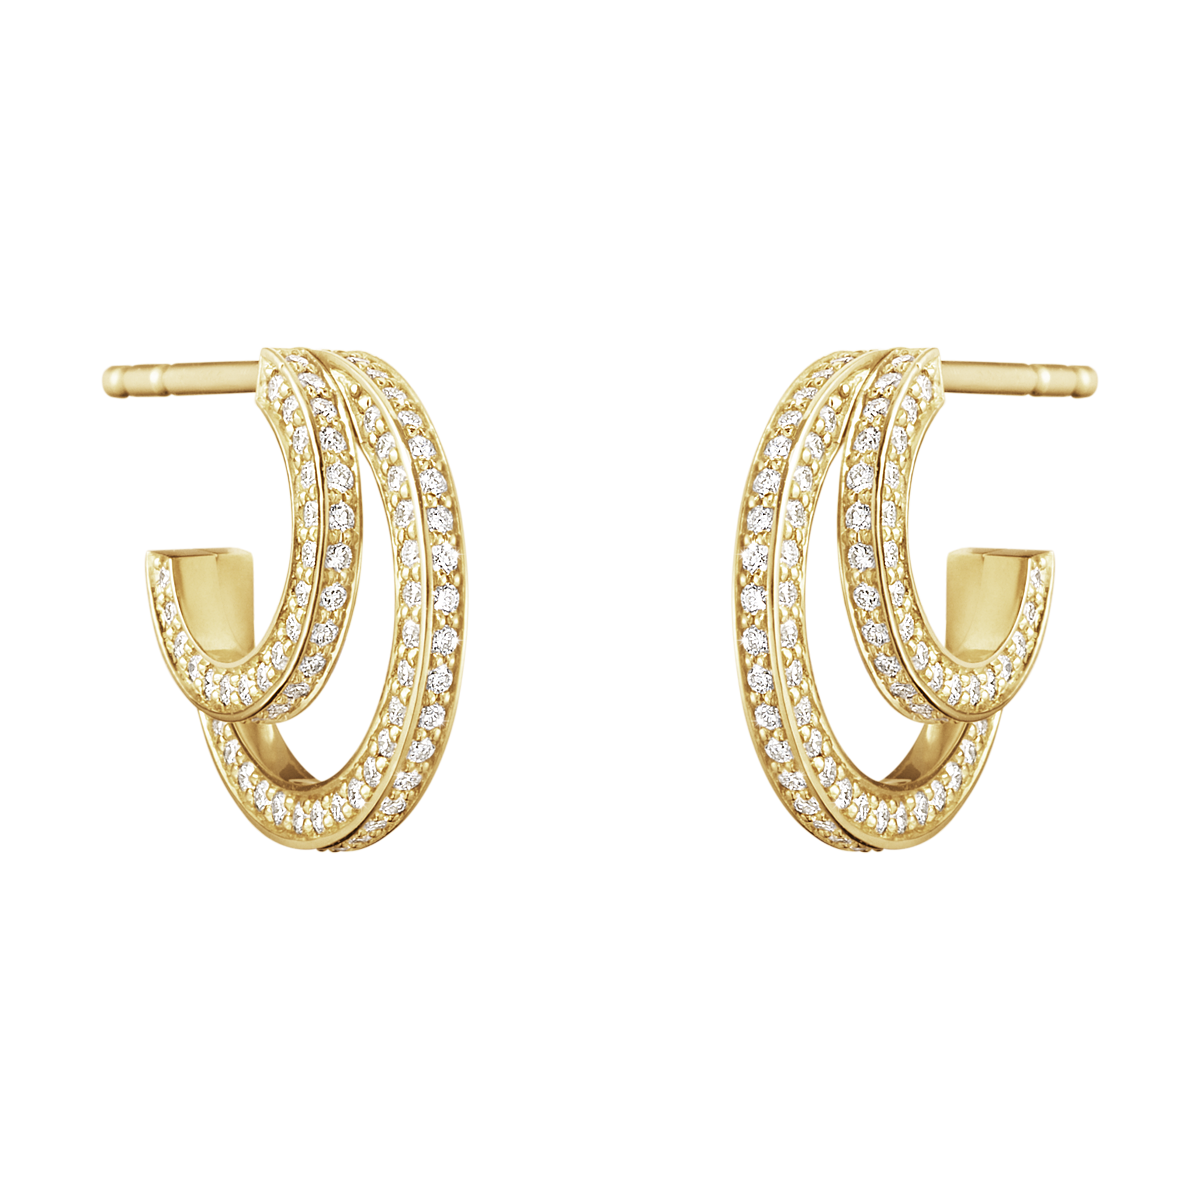 Halo yellow gold hoop earrings with diamonds | Georg Jensen